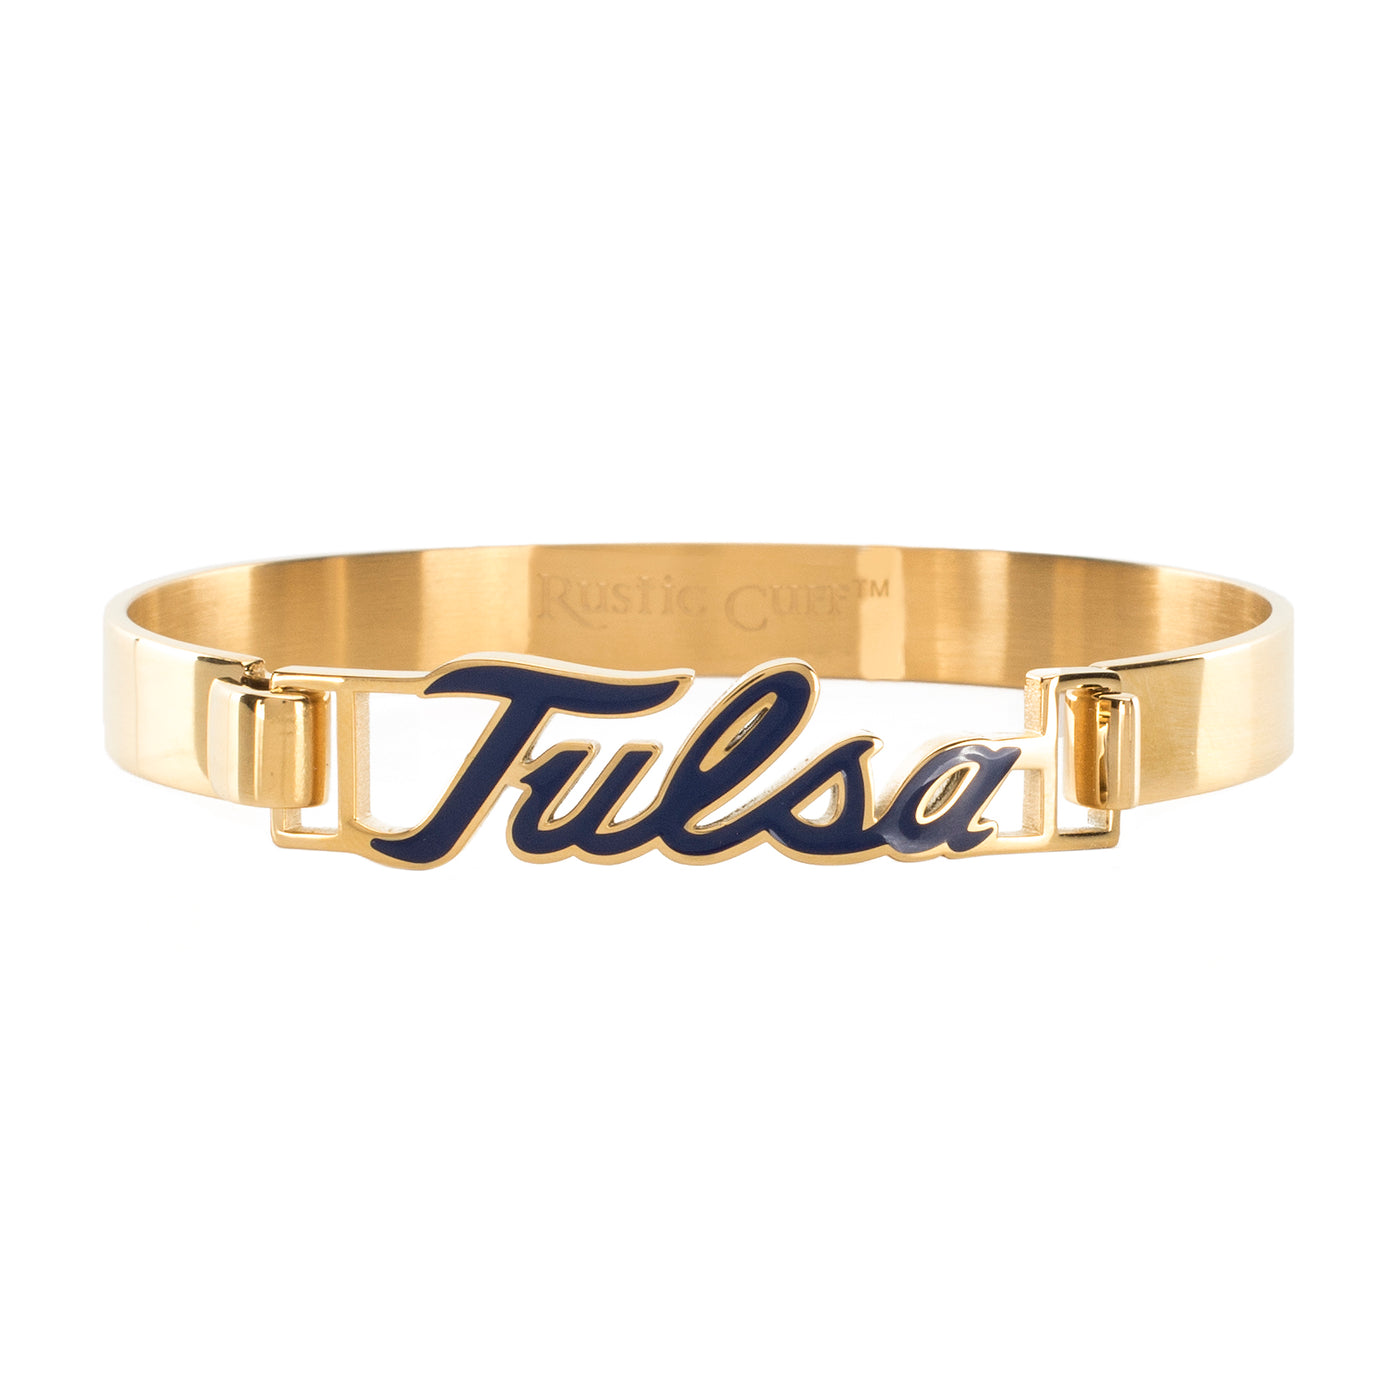 NCAA Kristin Bangle Bracelet - University of Tulsa "Tulsa" Gold